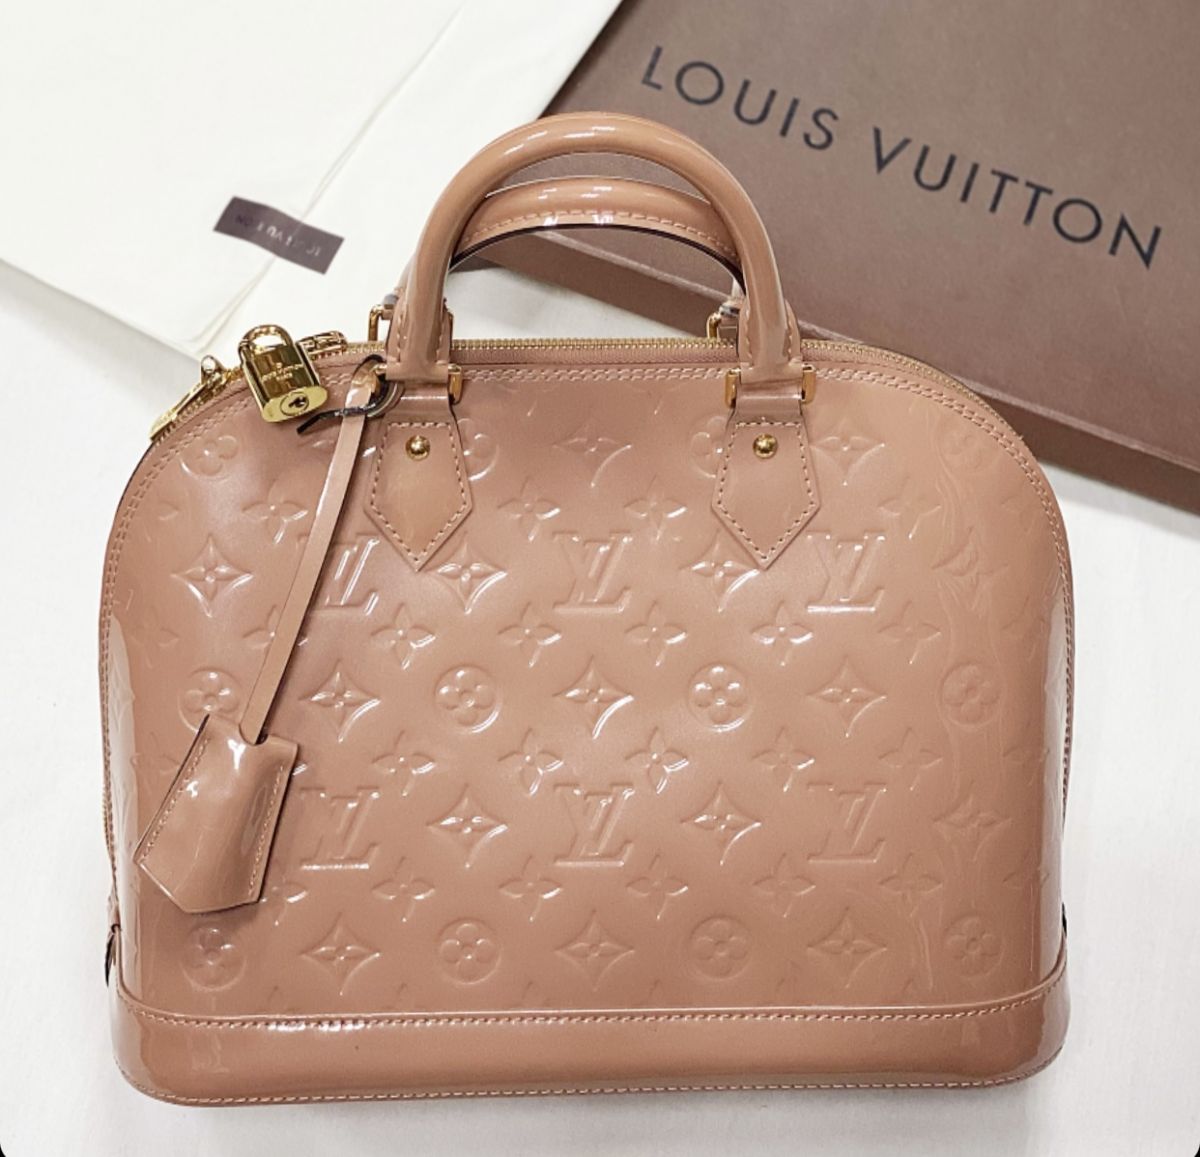 Сумка Louis Vuitton размер 30/22 цена 76 925 руб 